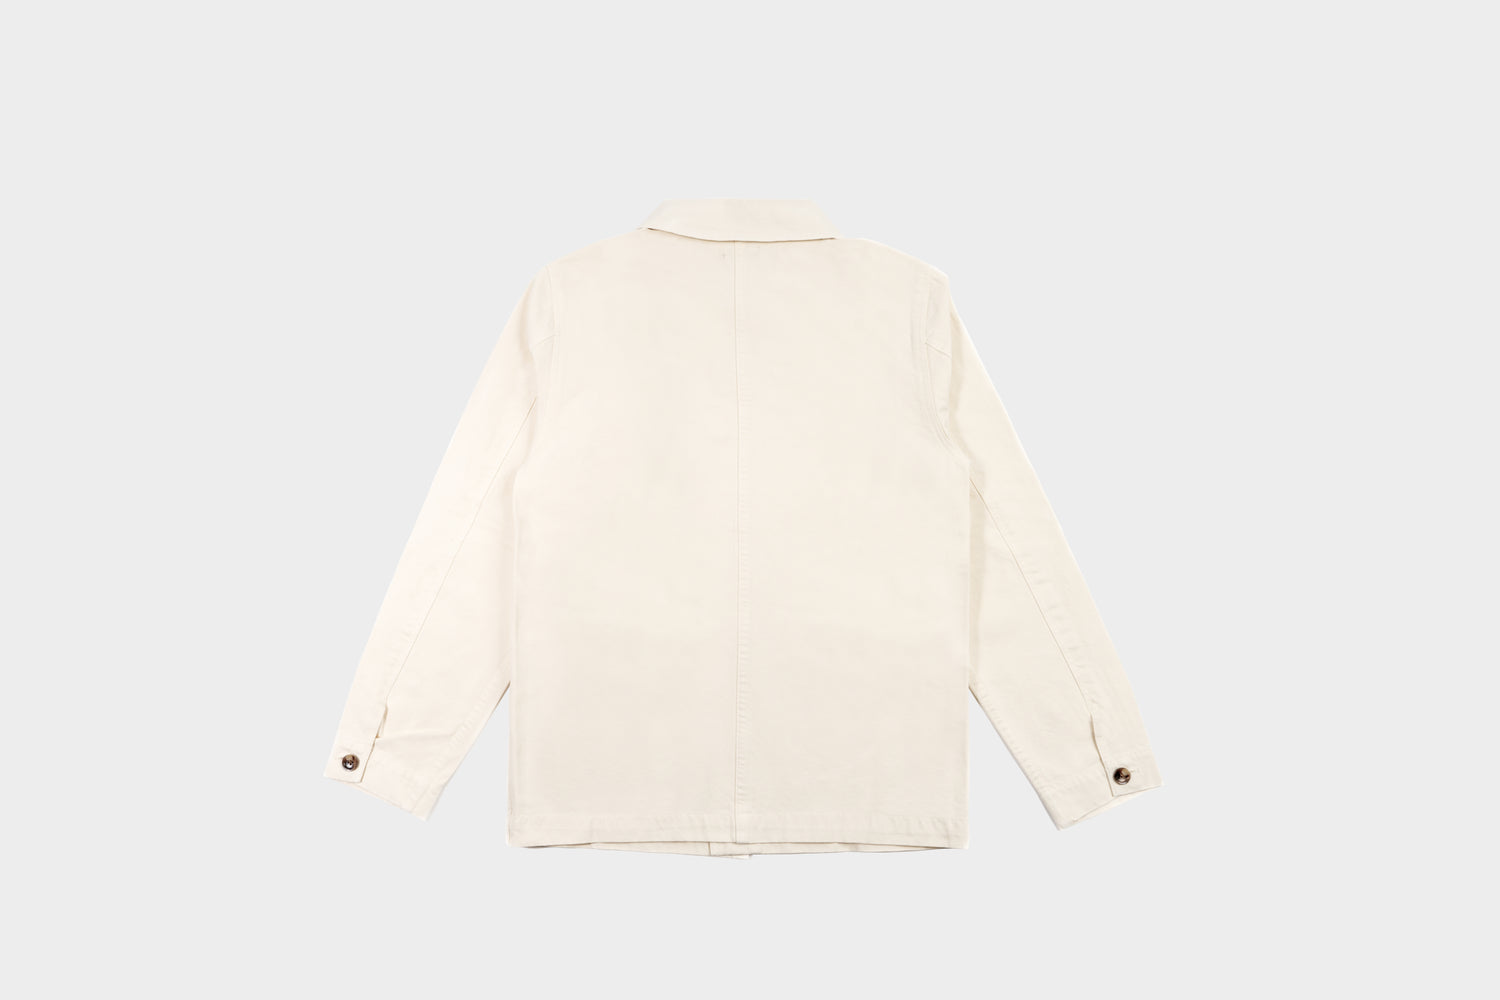 Terra Kaffe | The back of a cream-colored jacket